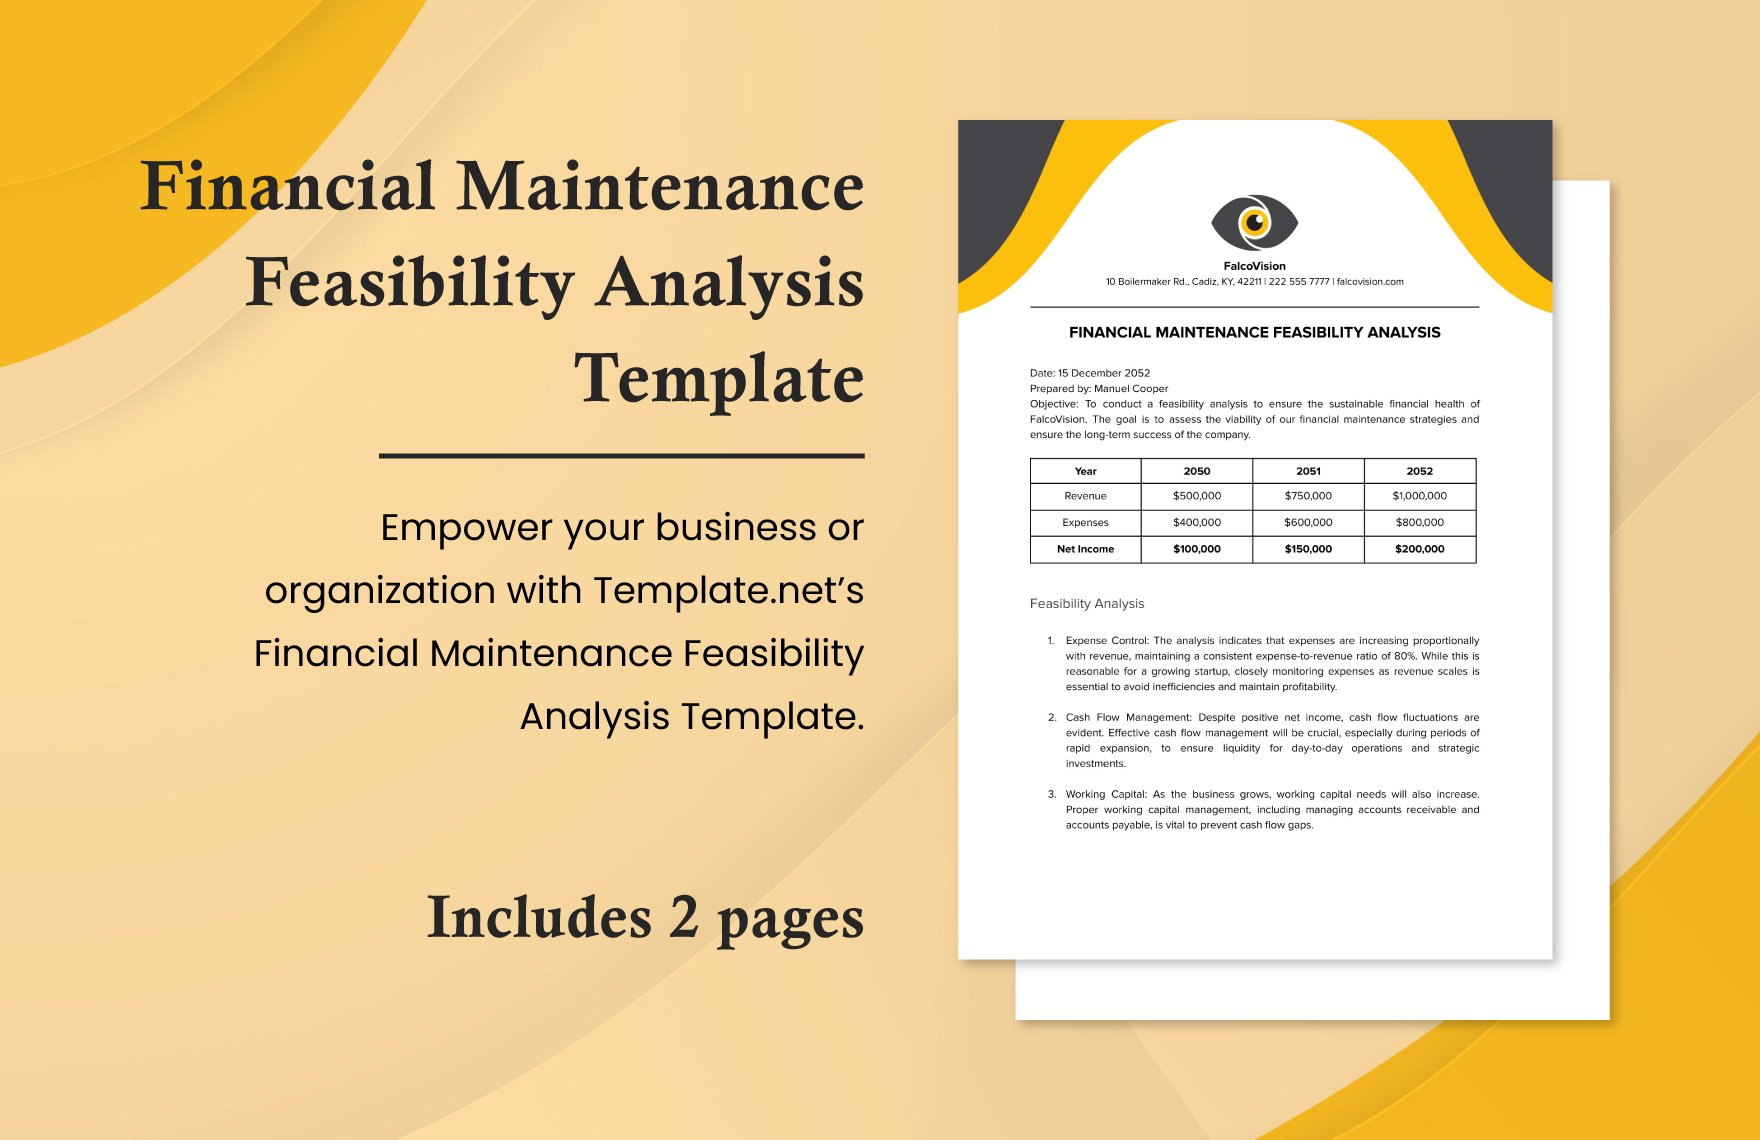 Financial Maintenance Feasibility Analysis Template